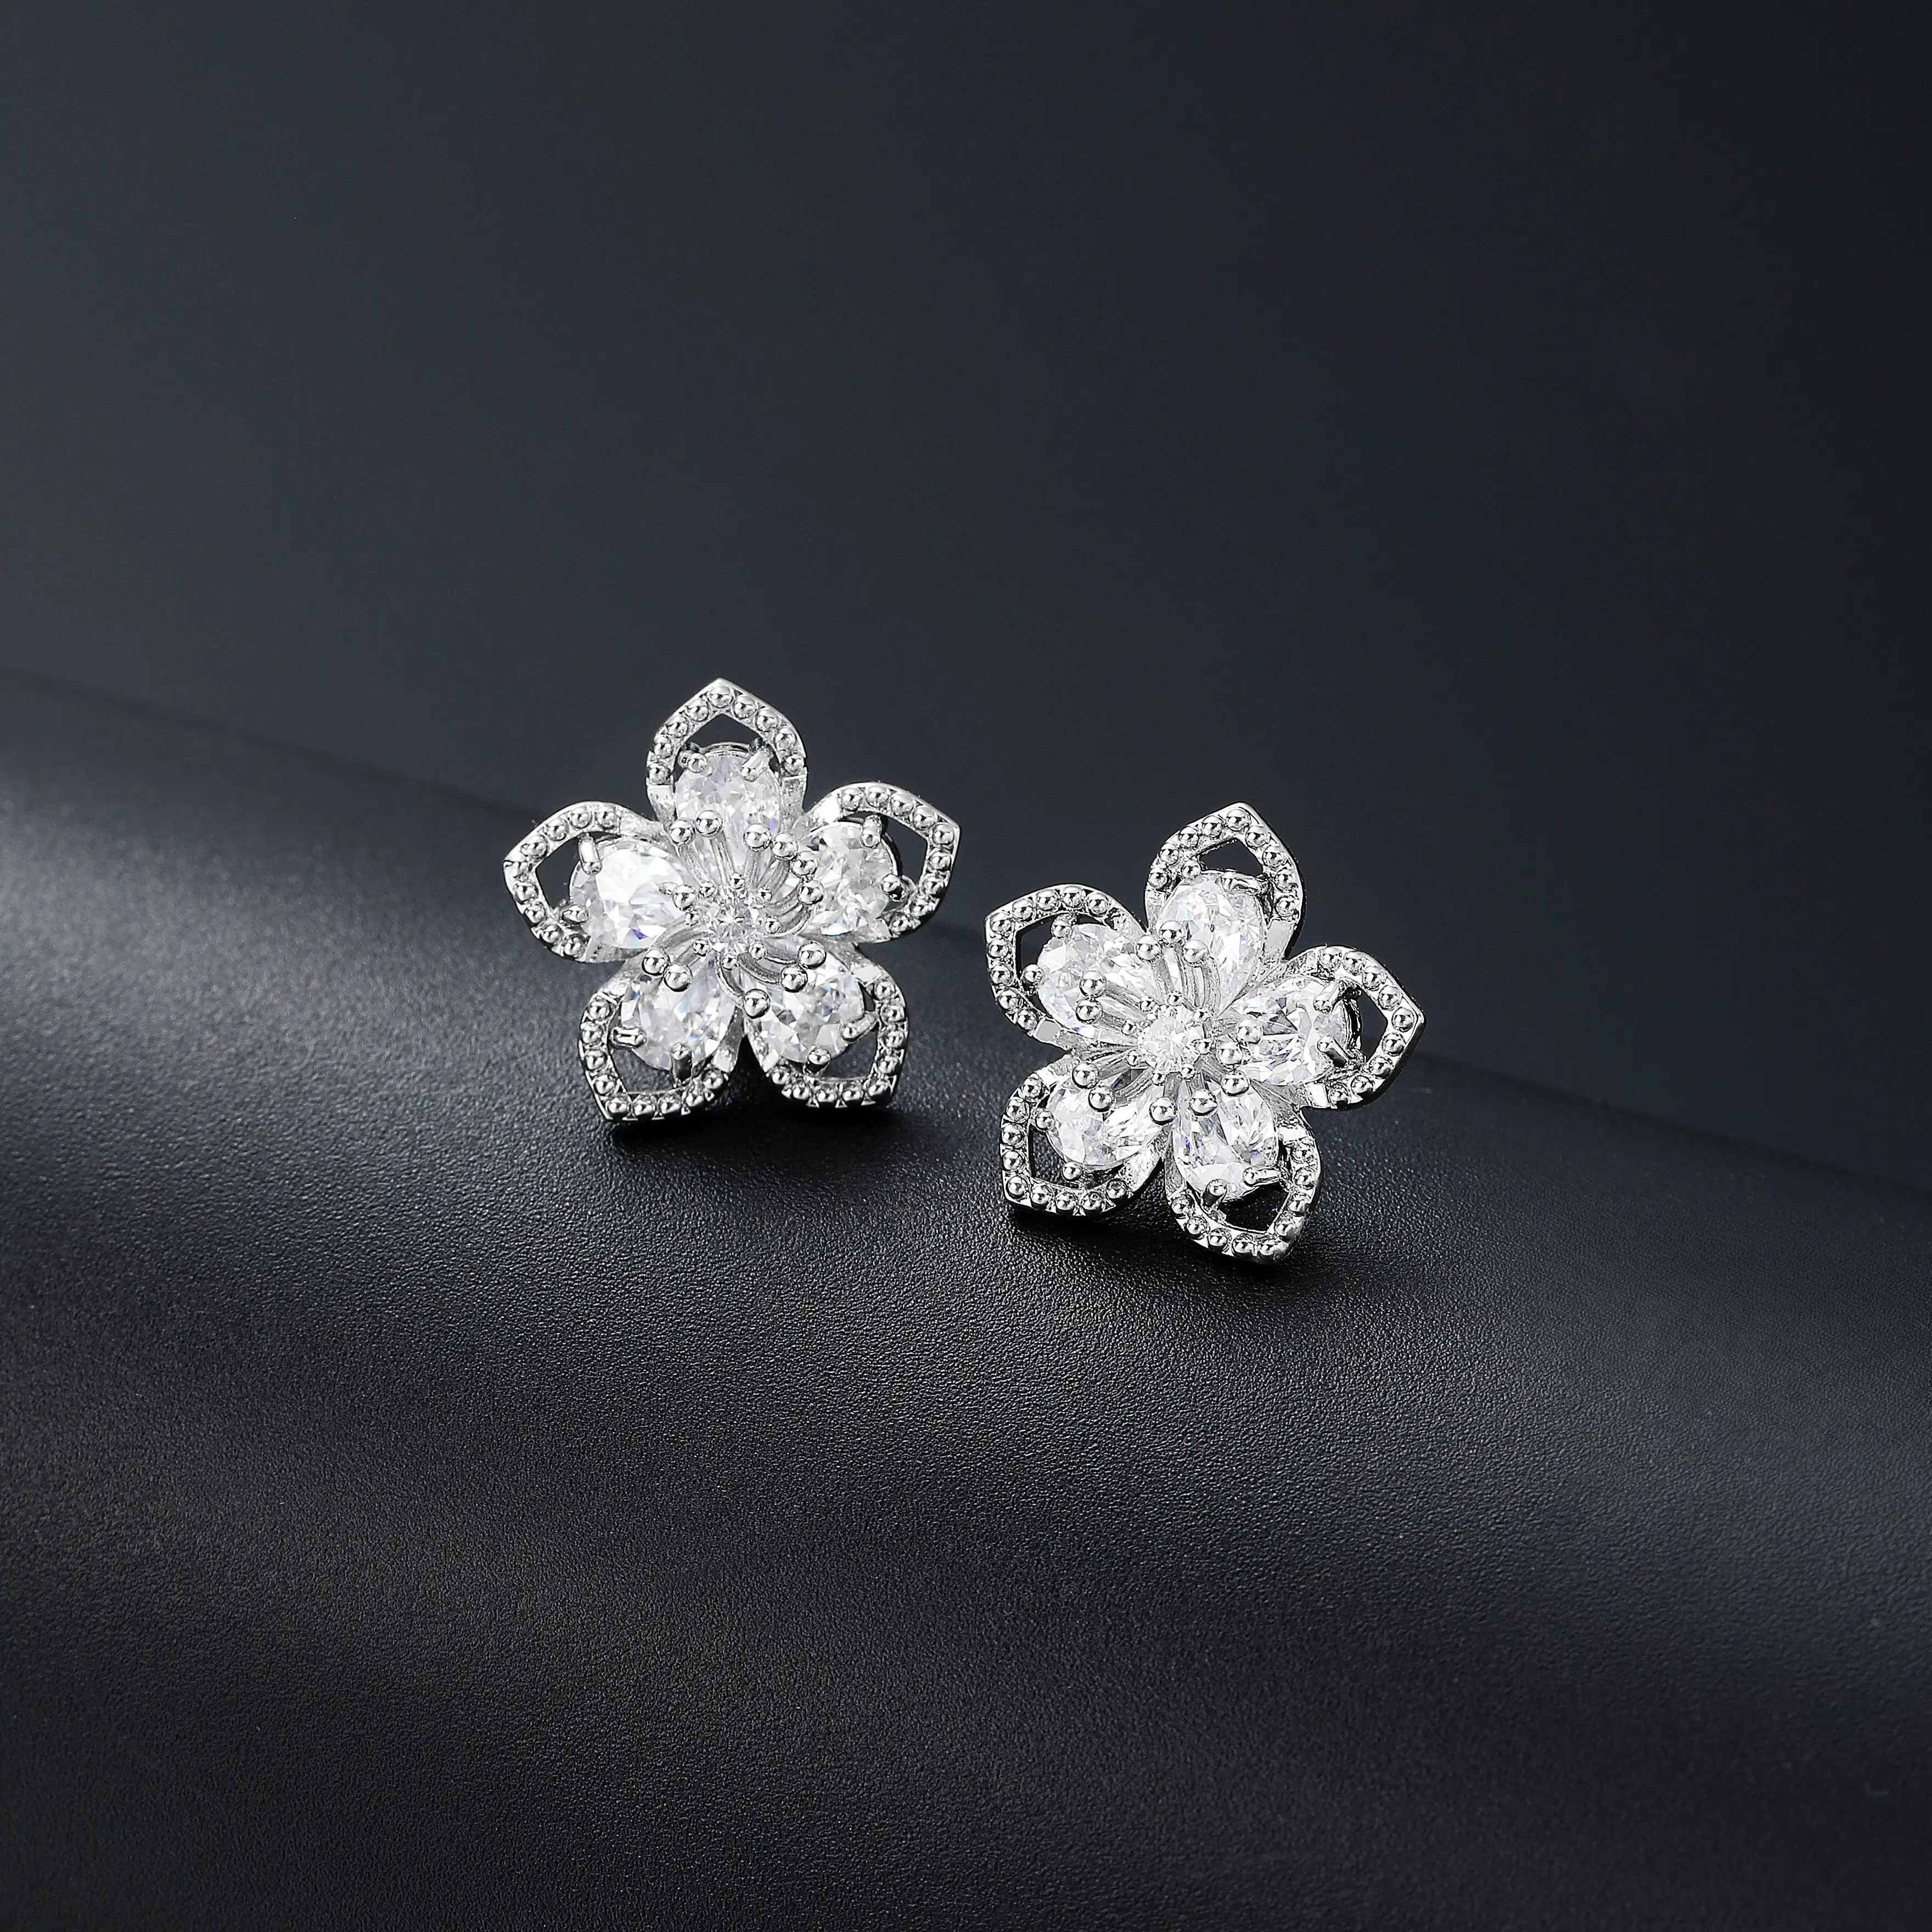 ins hot sells micro insert 5A flower 3D fashion diamond moissanite earrings luxury women